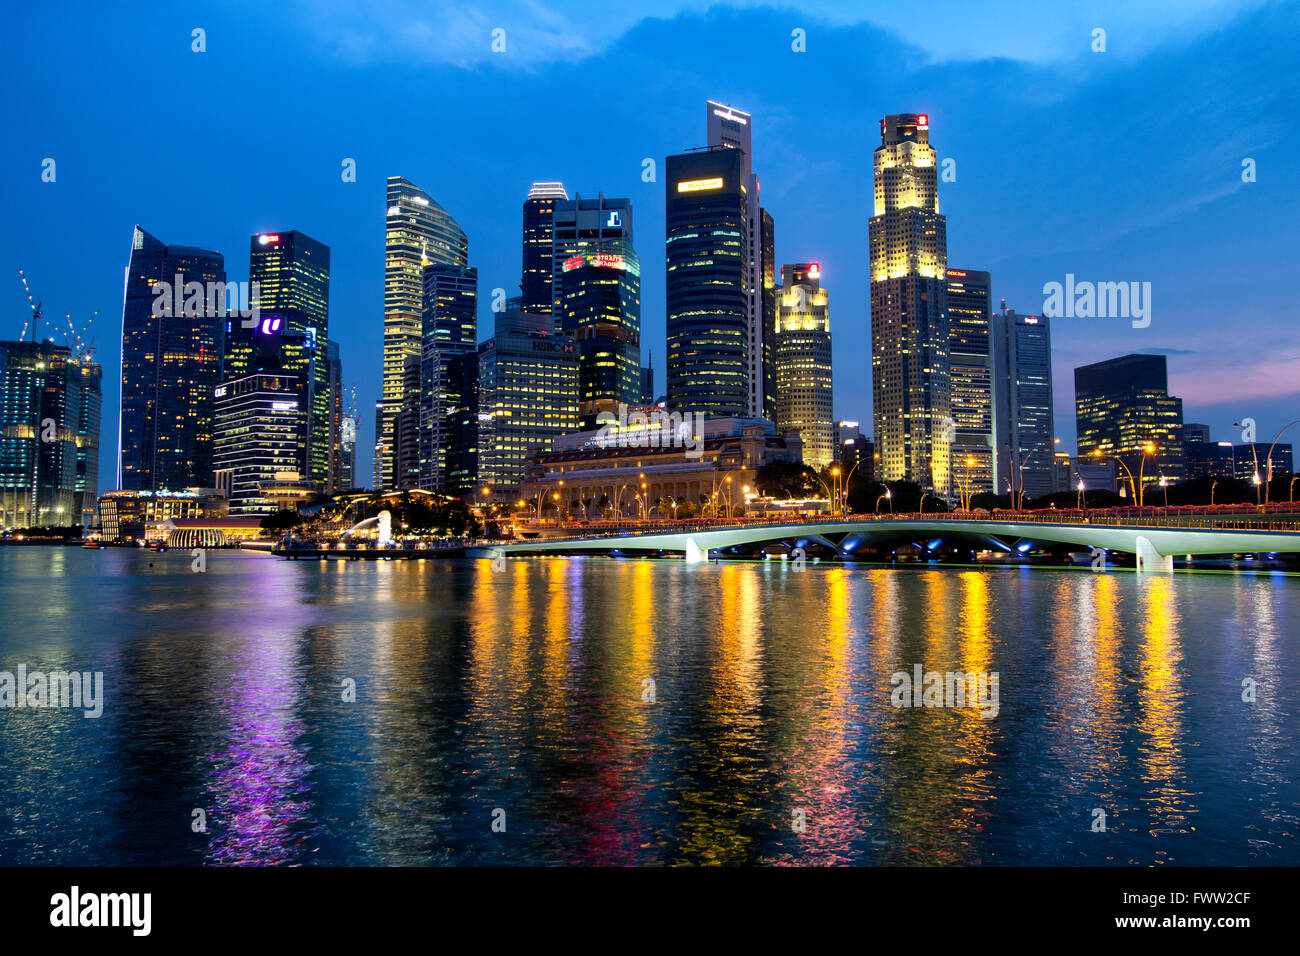 Marina bay at night in Singapore Stock Photo